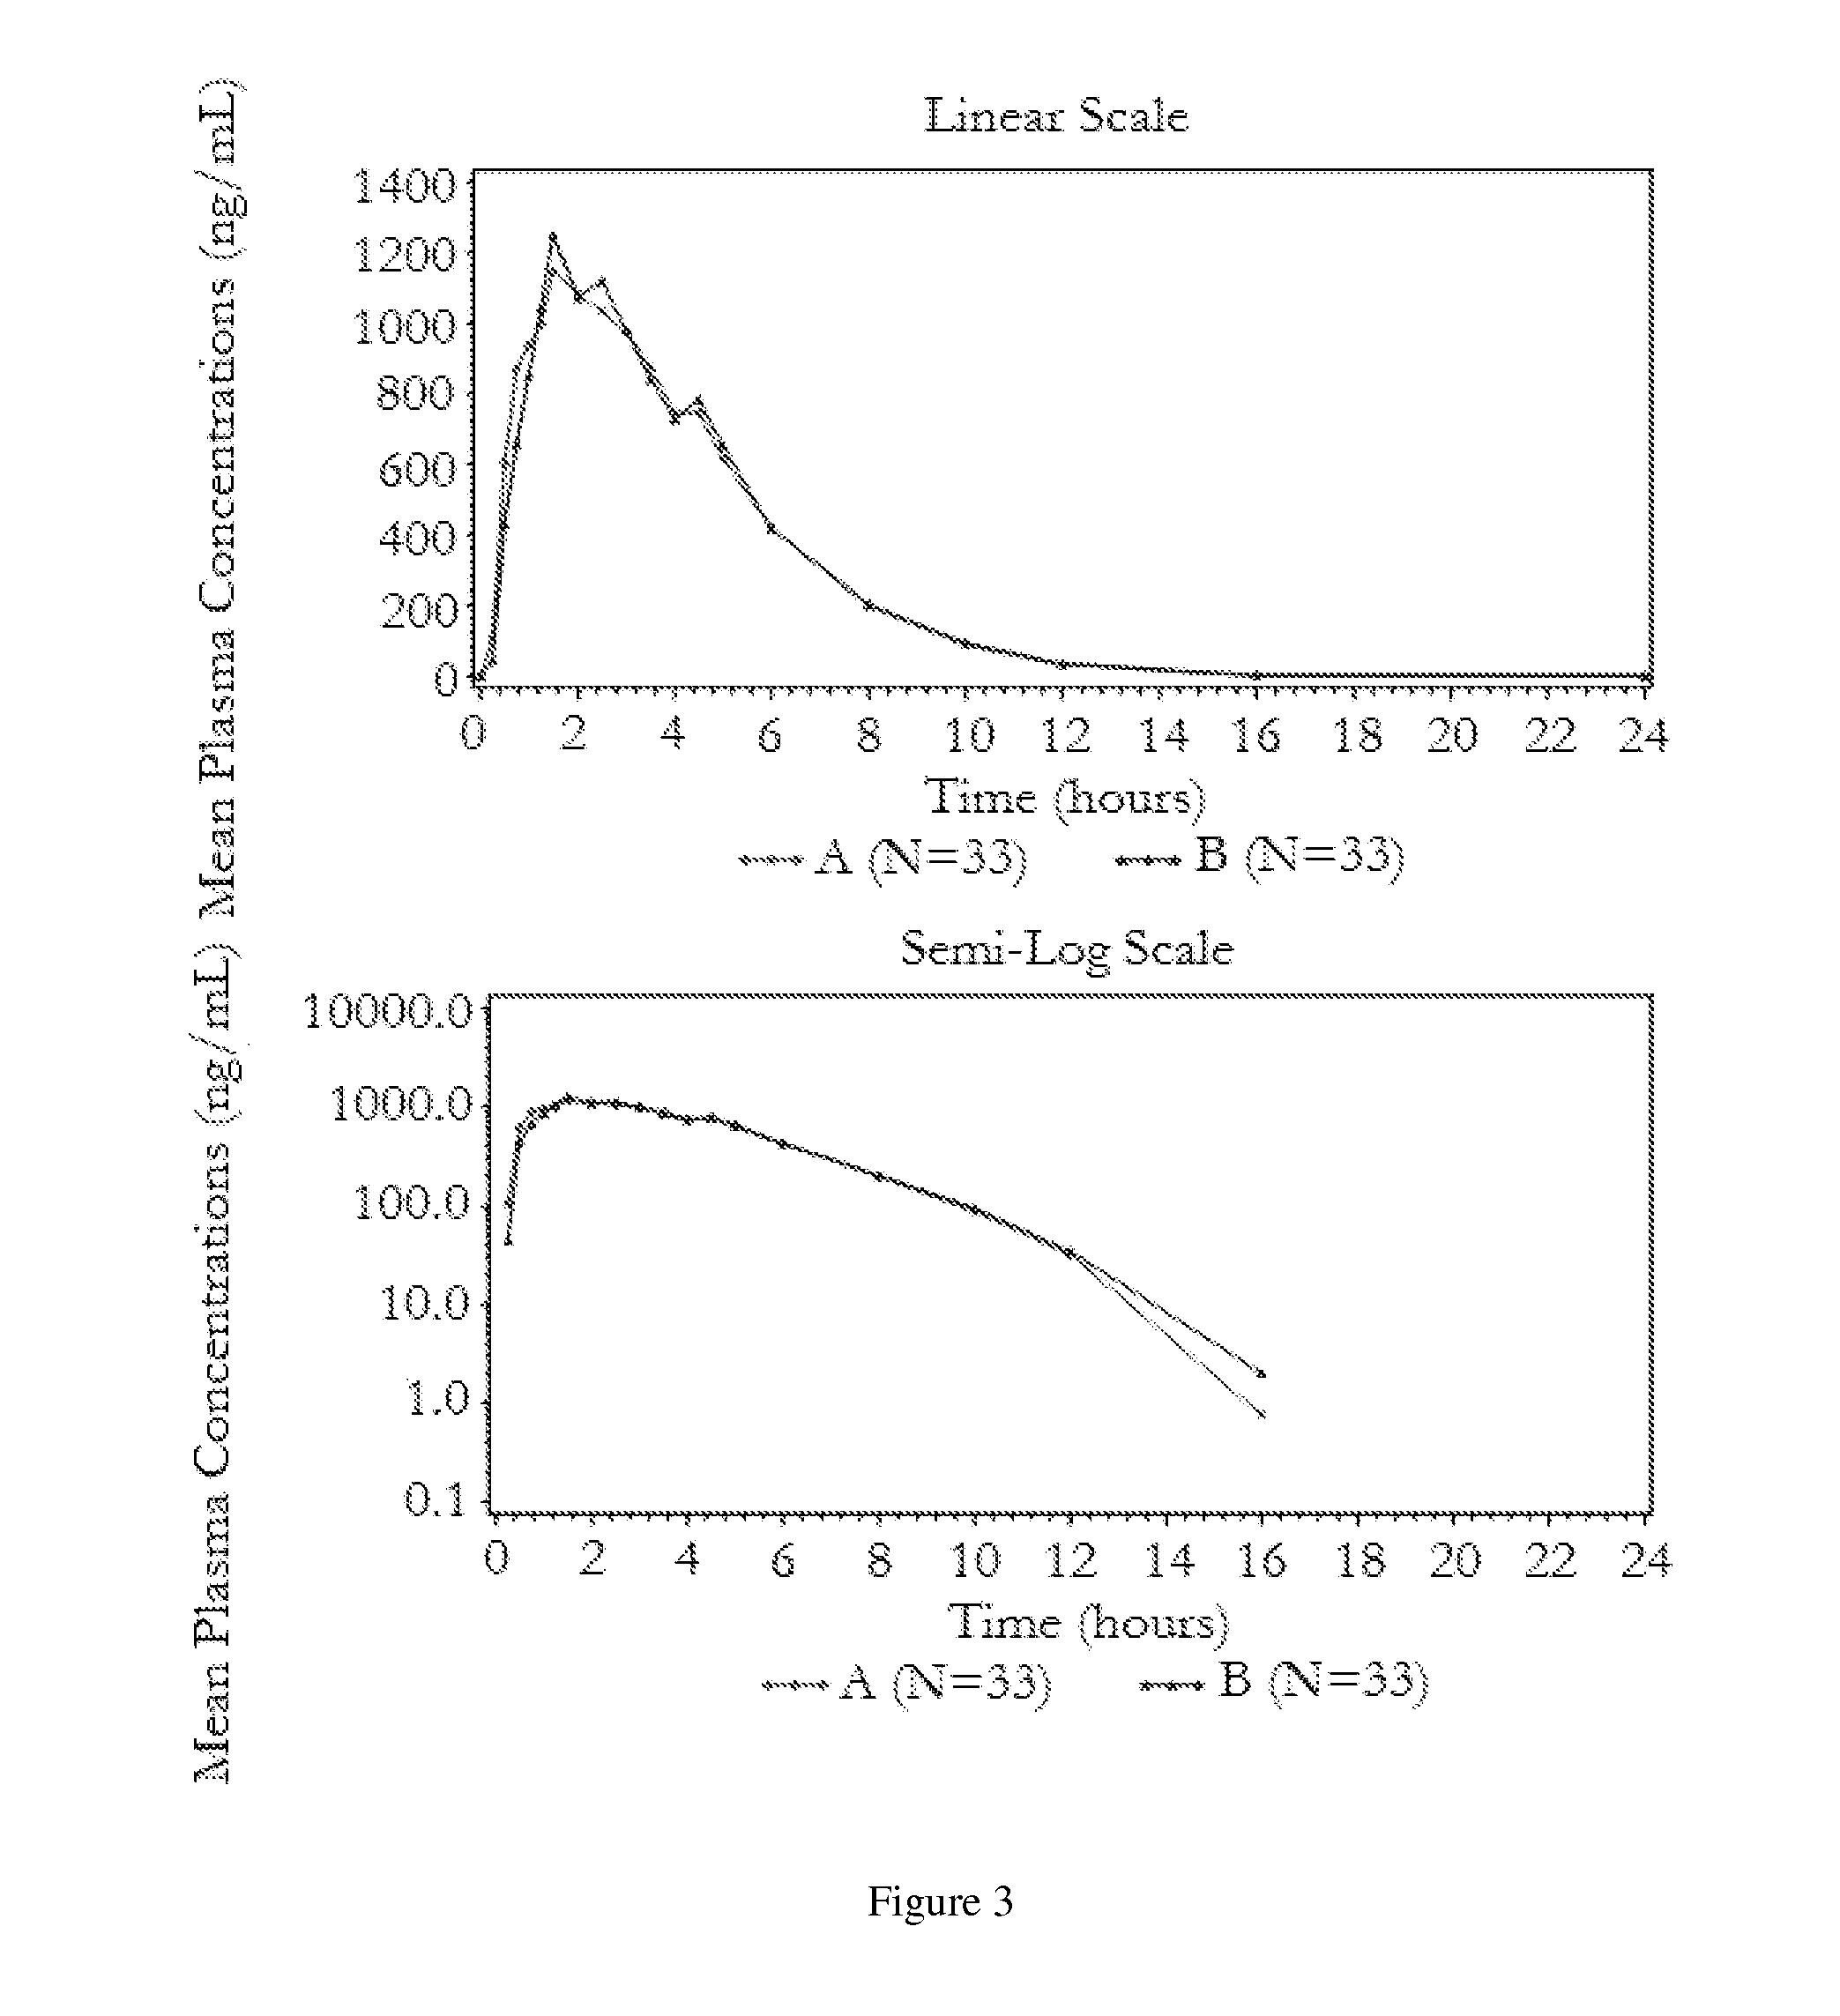 Formulation containing carbidopa, levodopa, and entacapone